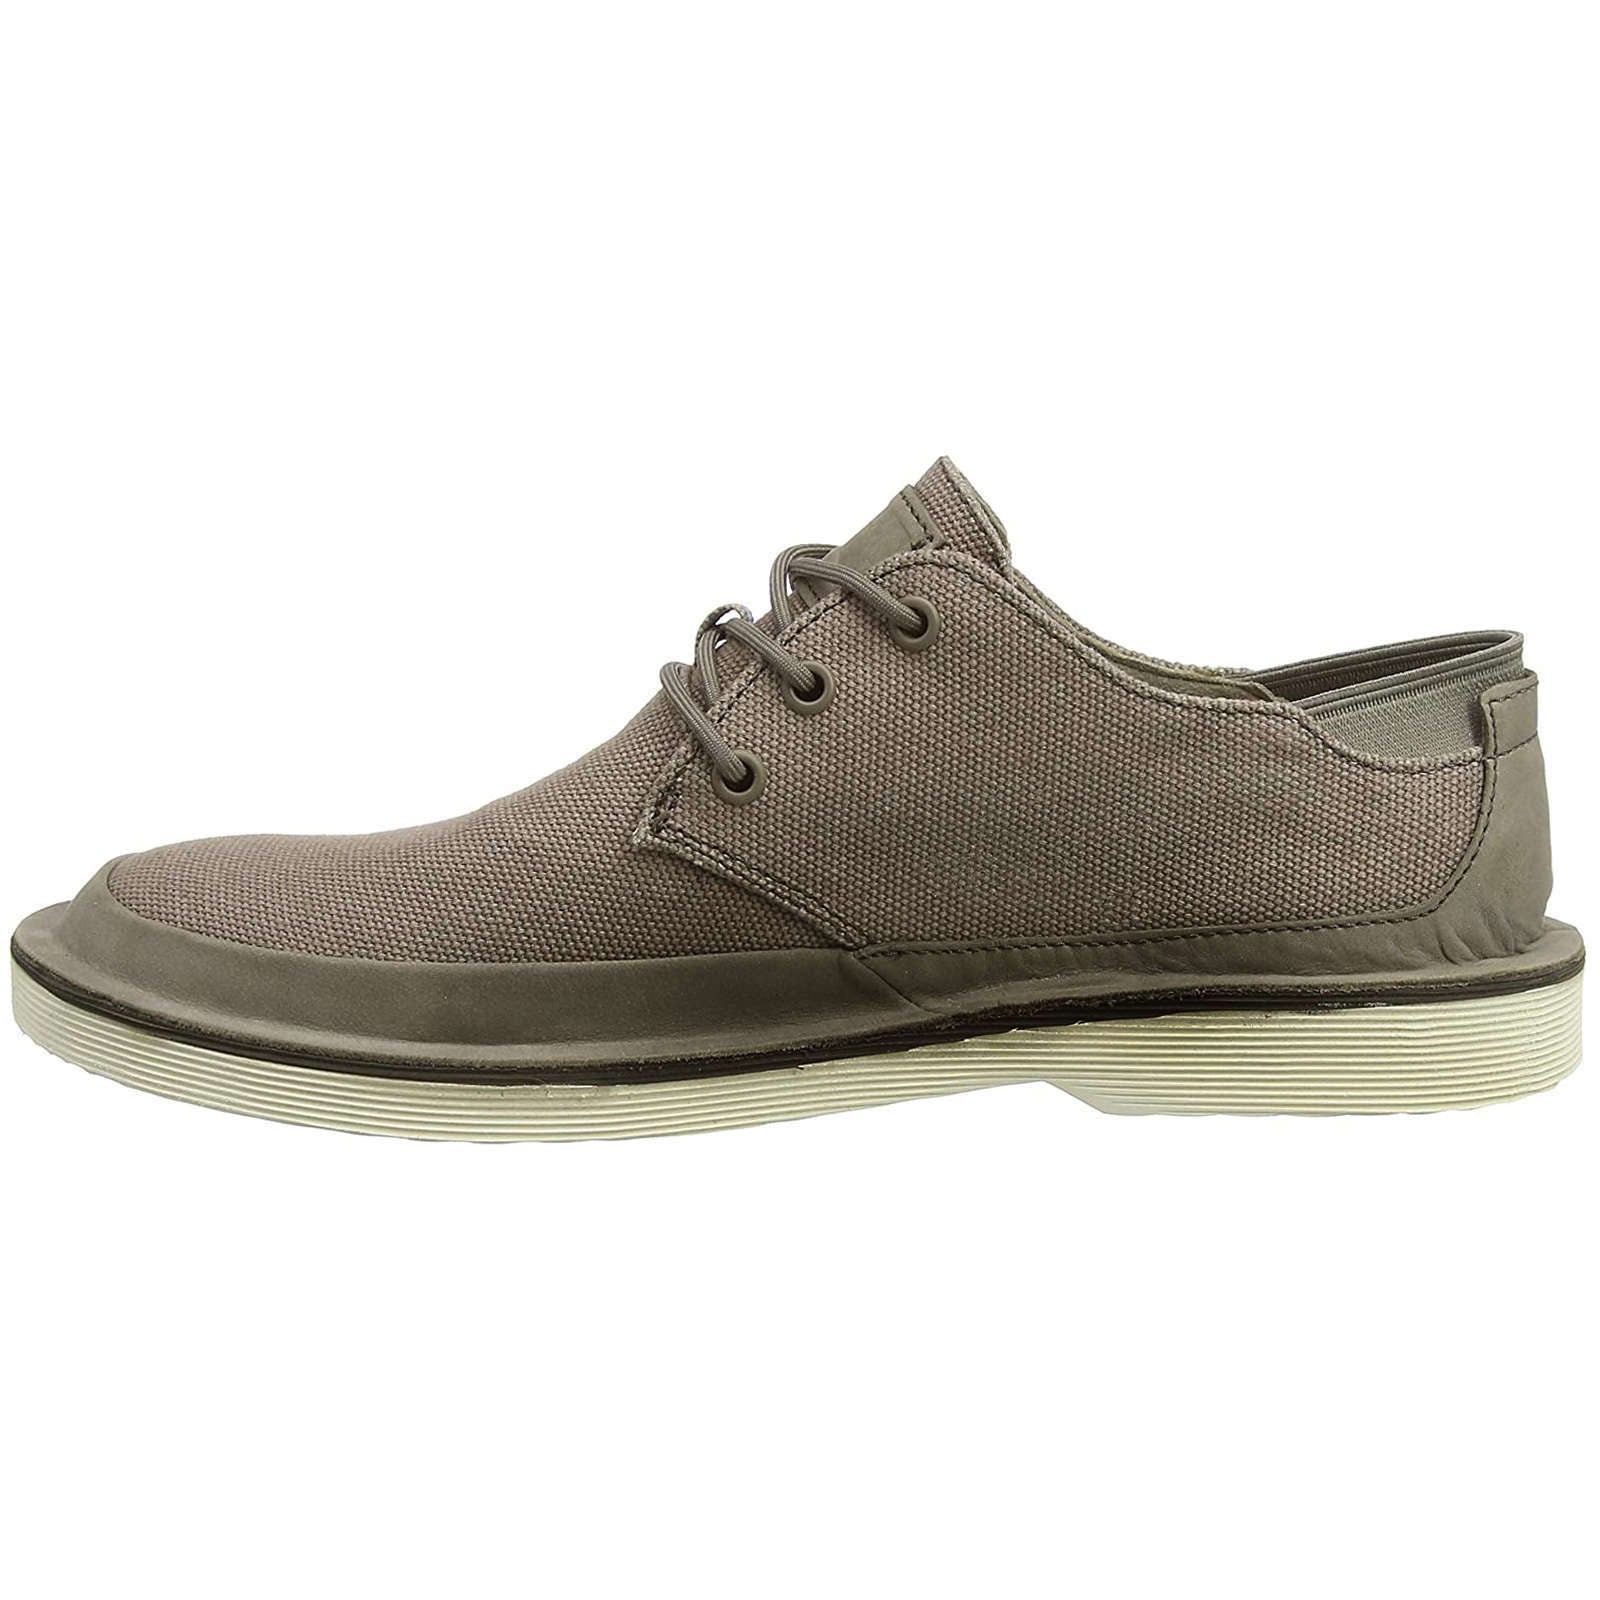 Camper Morrys Textile Men's Low-Top Sneakers#color_light grey